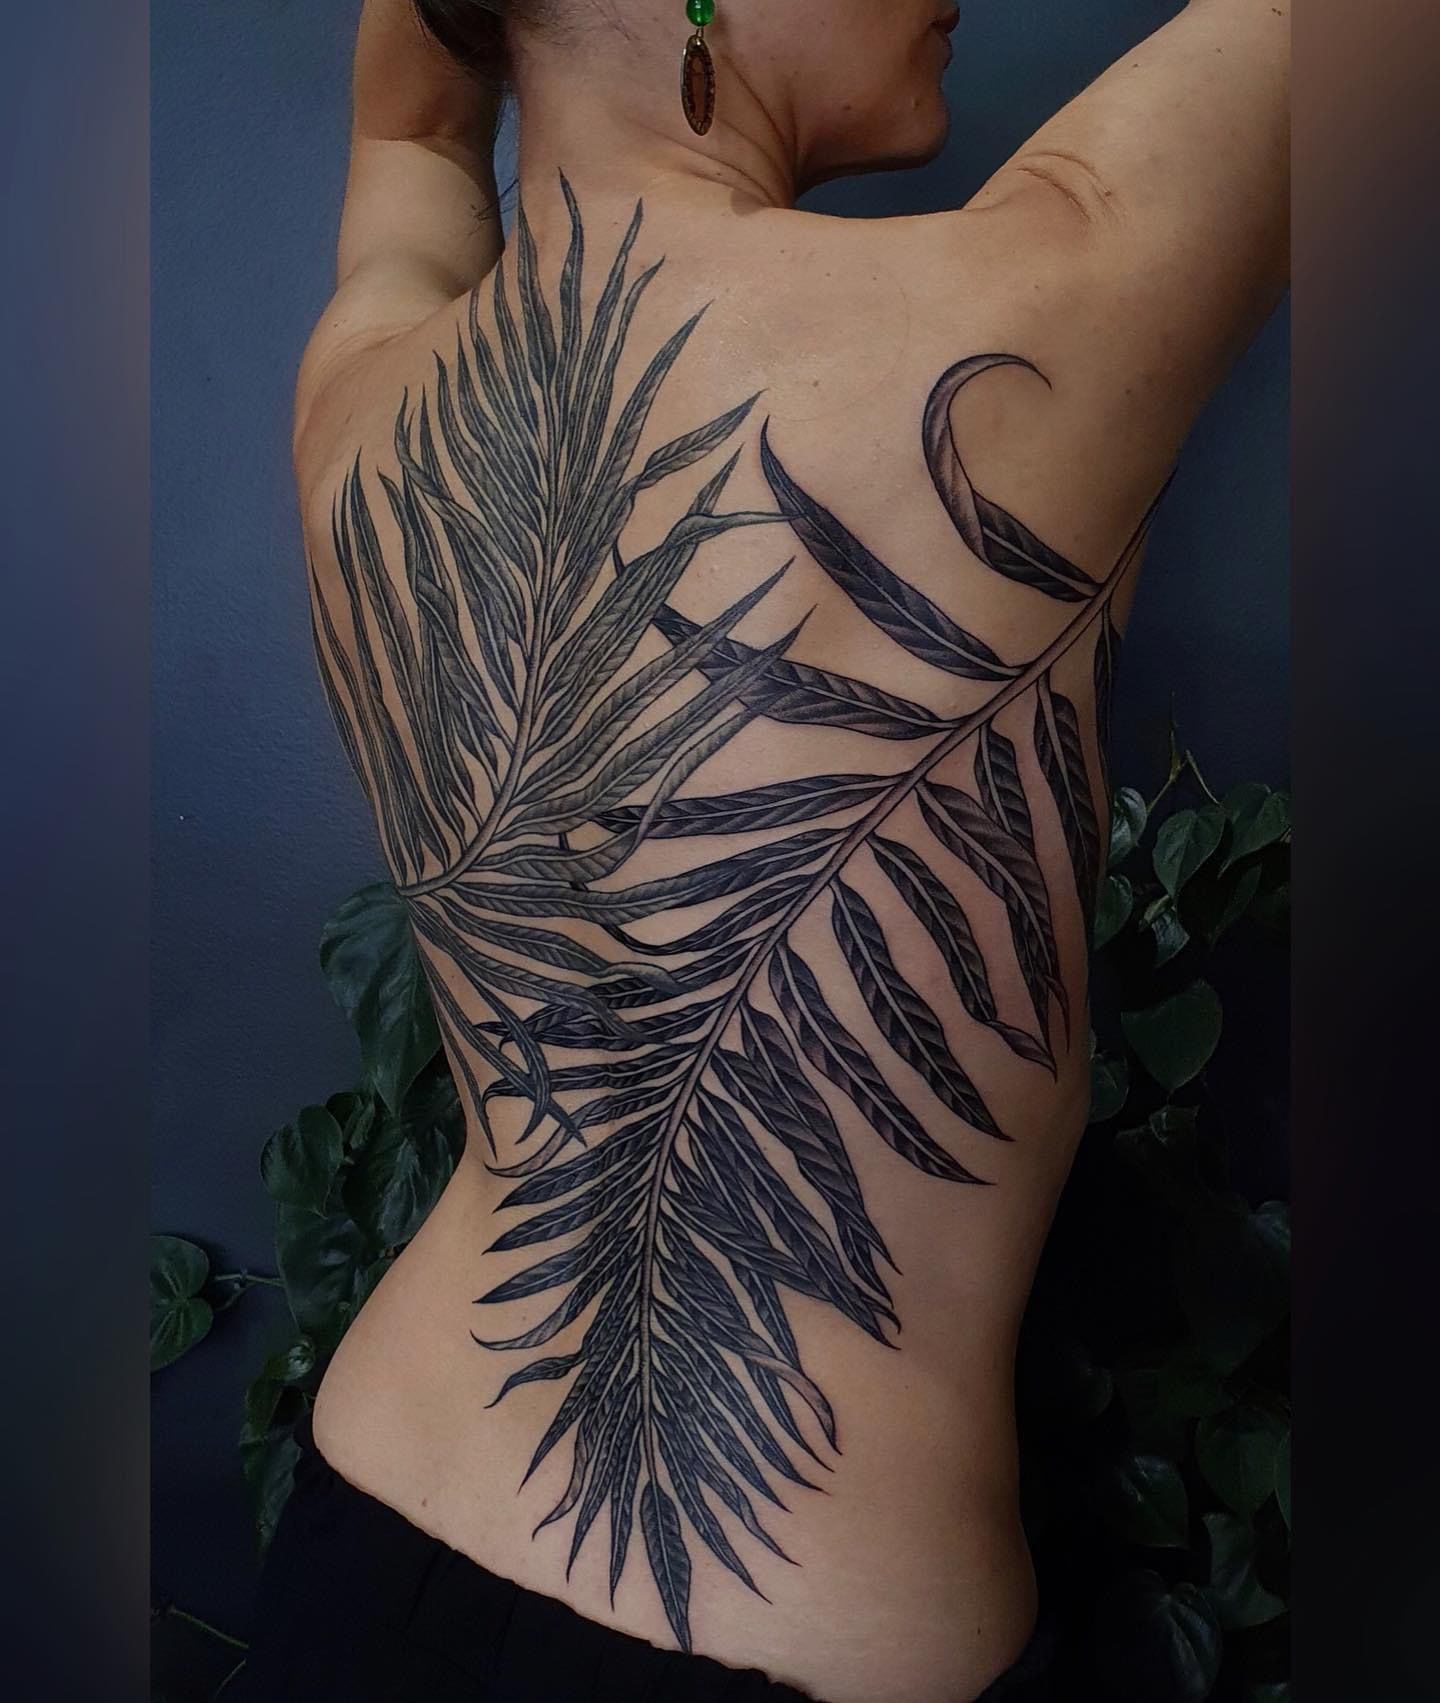 Tattoo uploaded by Robert Davies • Leaf Tattoo by Zihee #leaf #leaftattoo  #contemporarytattoos #contemporary #moderntattoos #color #colorfultattoo  #abstract #graphic #korean #southkorean #Zihee • Tattoodo